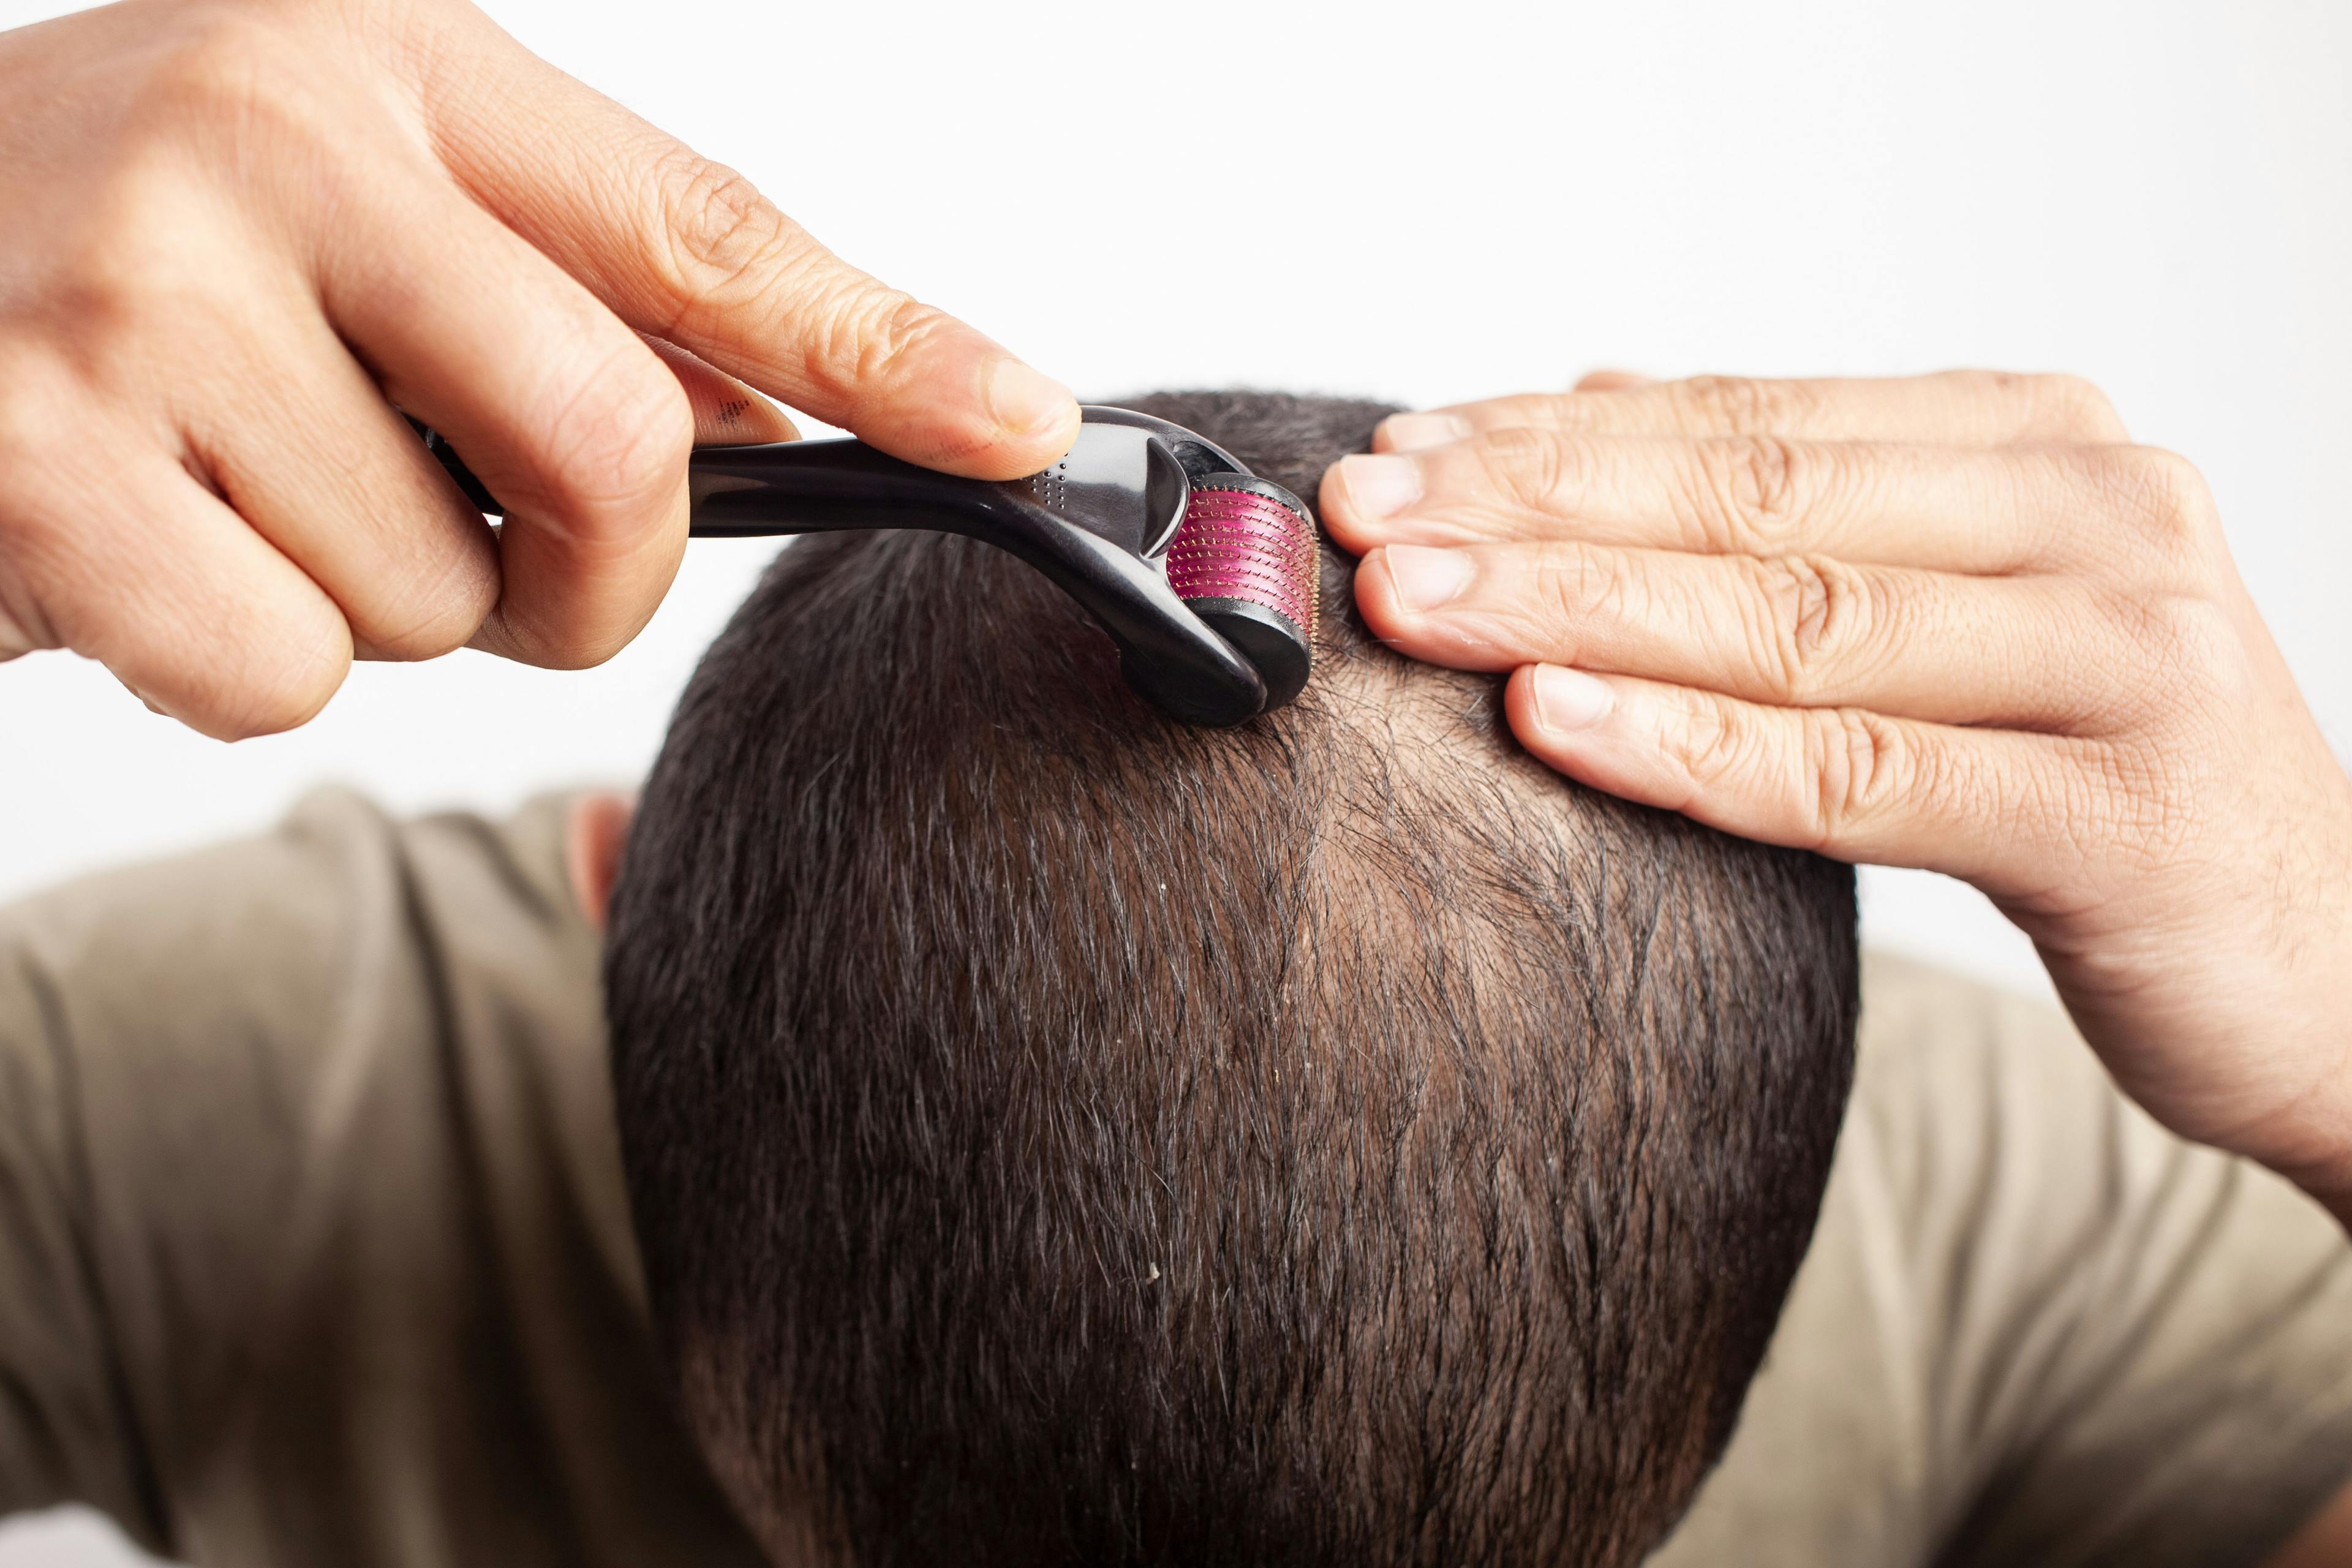 Microneedling hair loss treatment | Image Credit: Dharma - stock.adobe.com